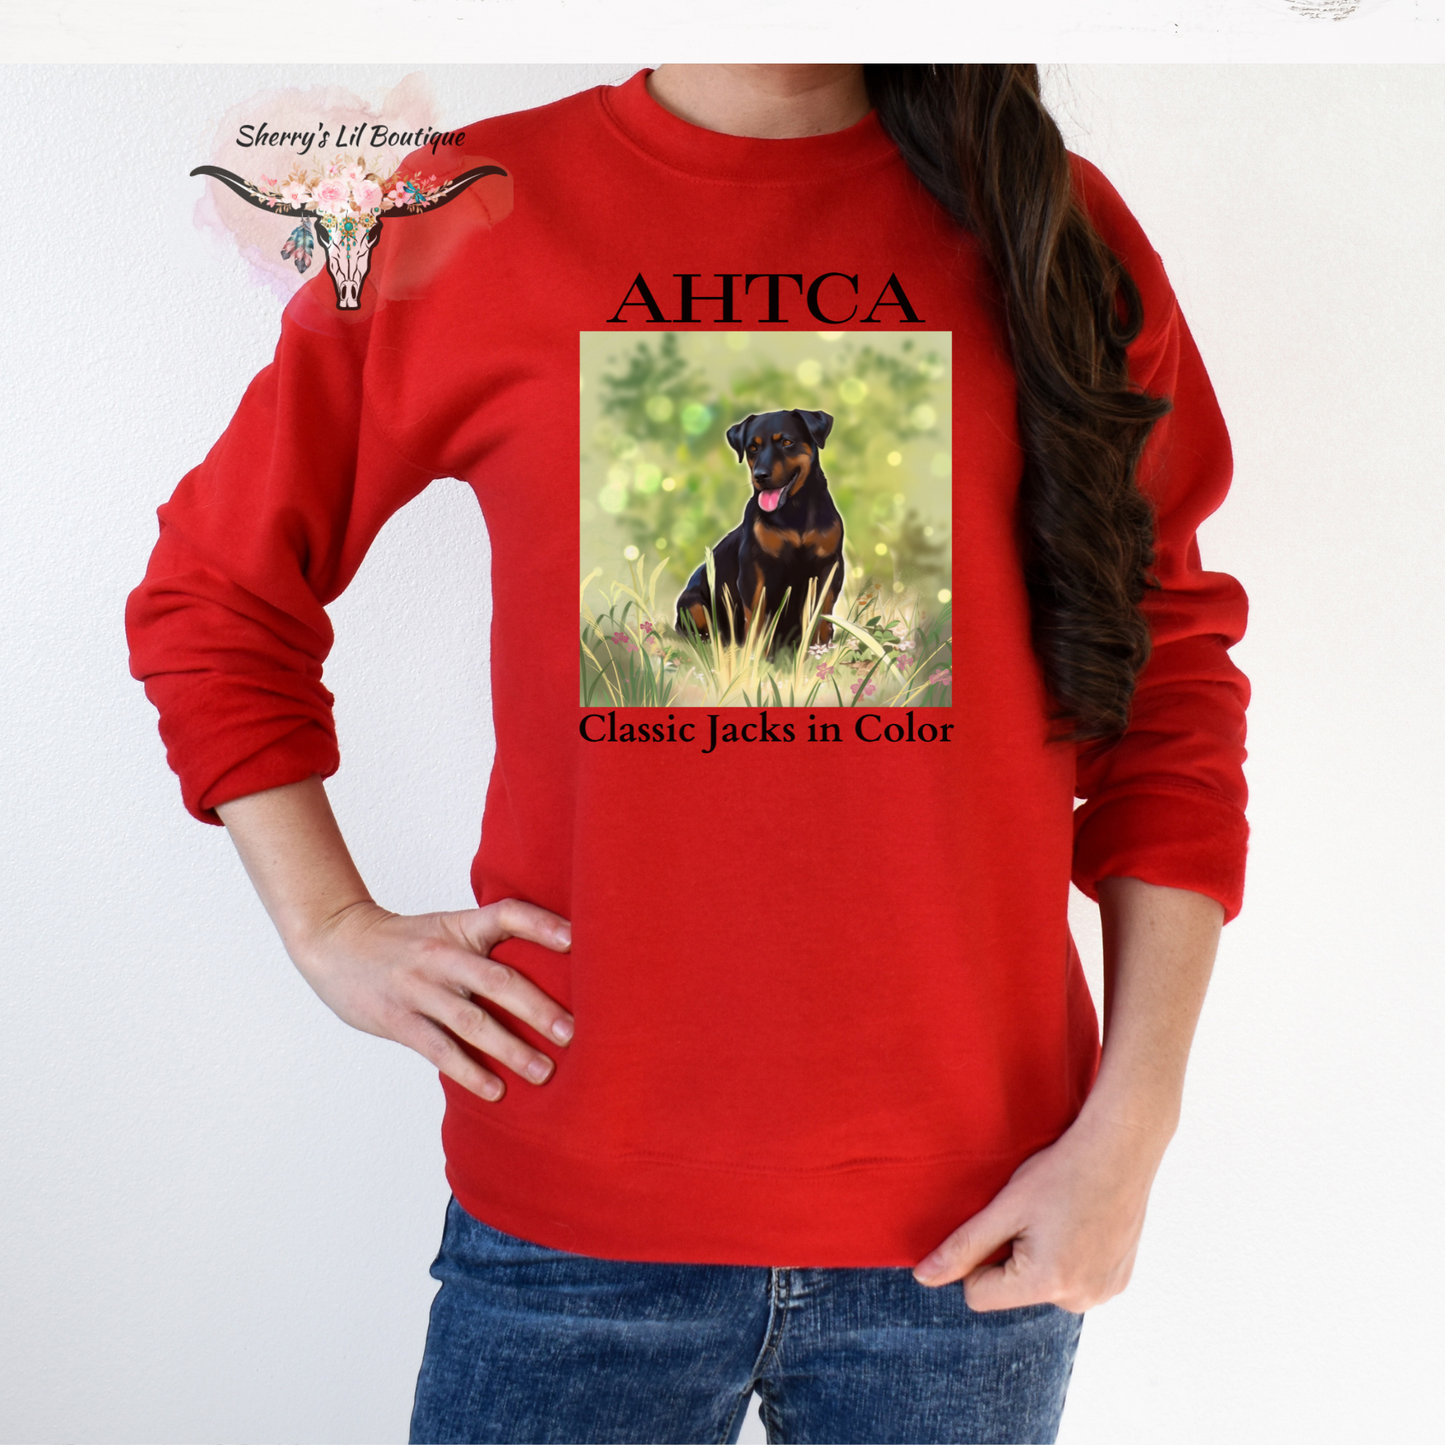 Red sweatshirt with AHTCA graphic design